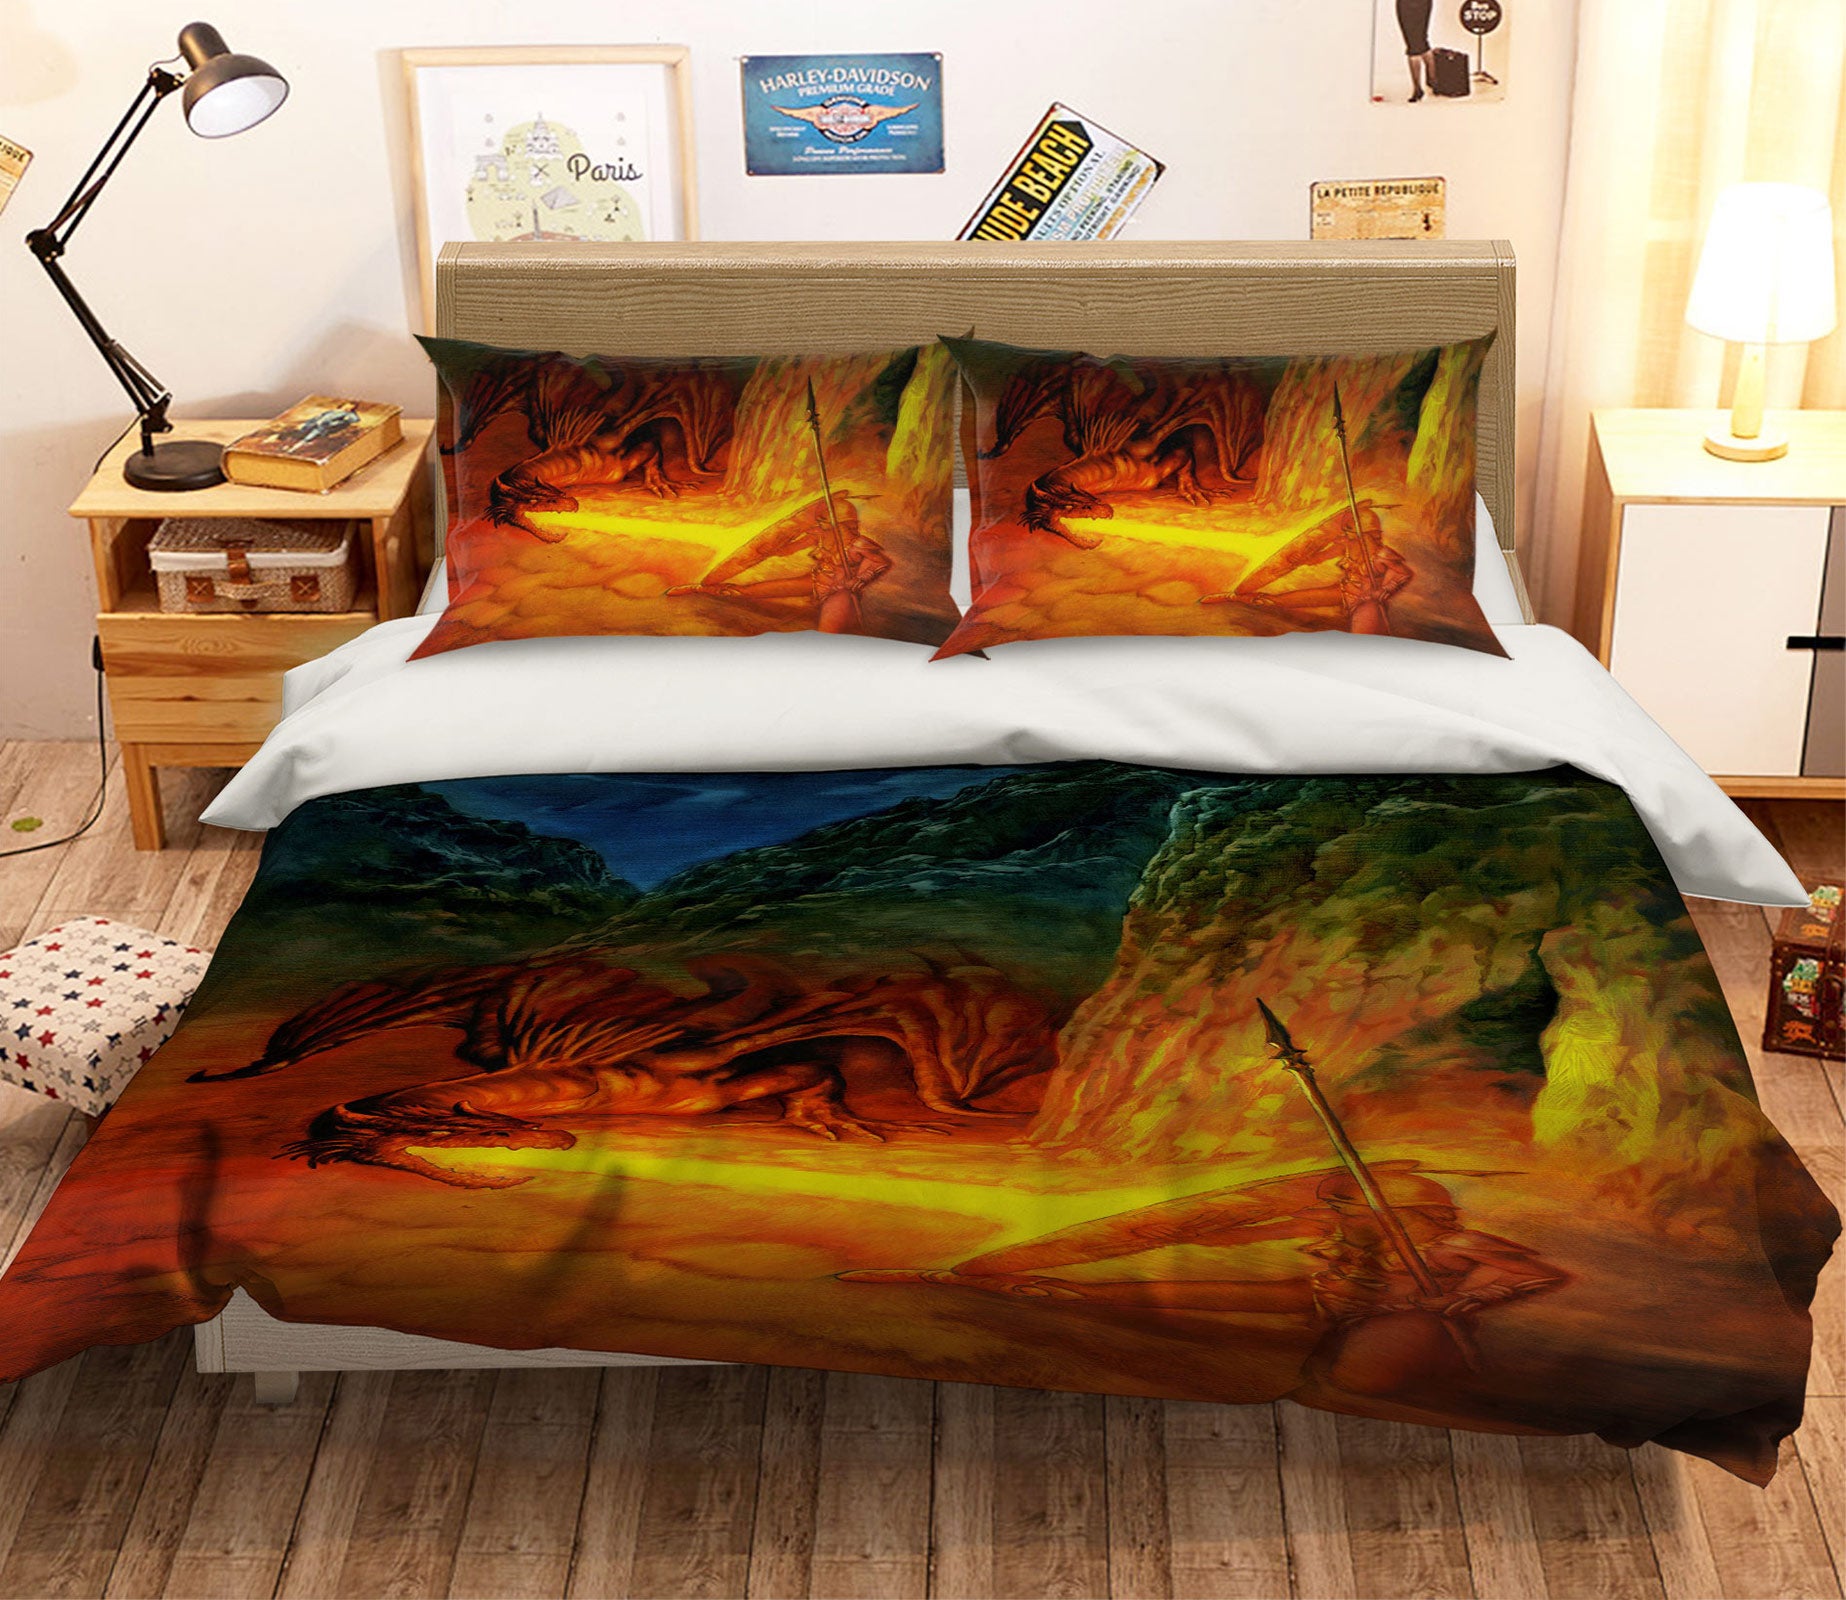 3D Fire Dragon 6229 Ciruelo Bedding Bed Pillowcases Quilt